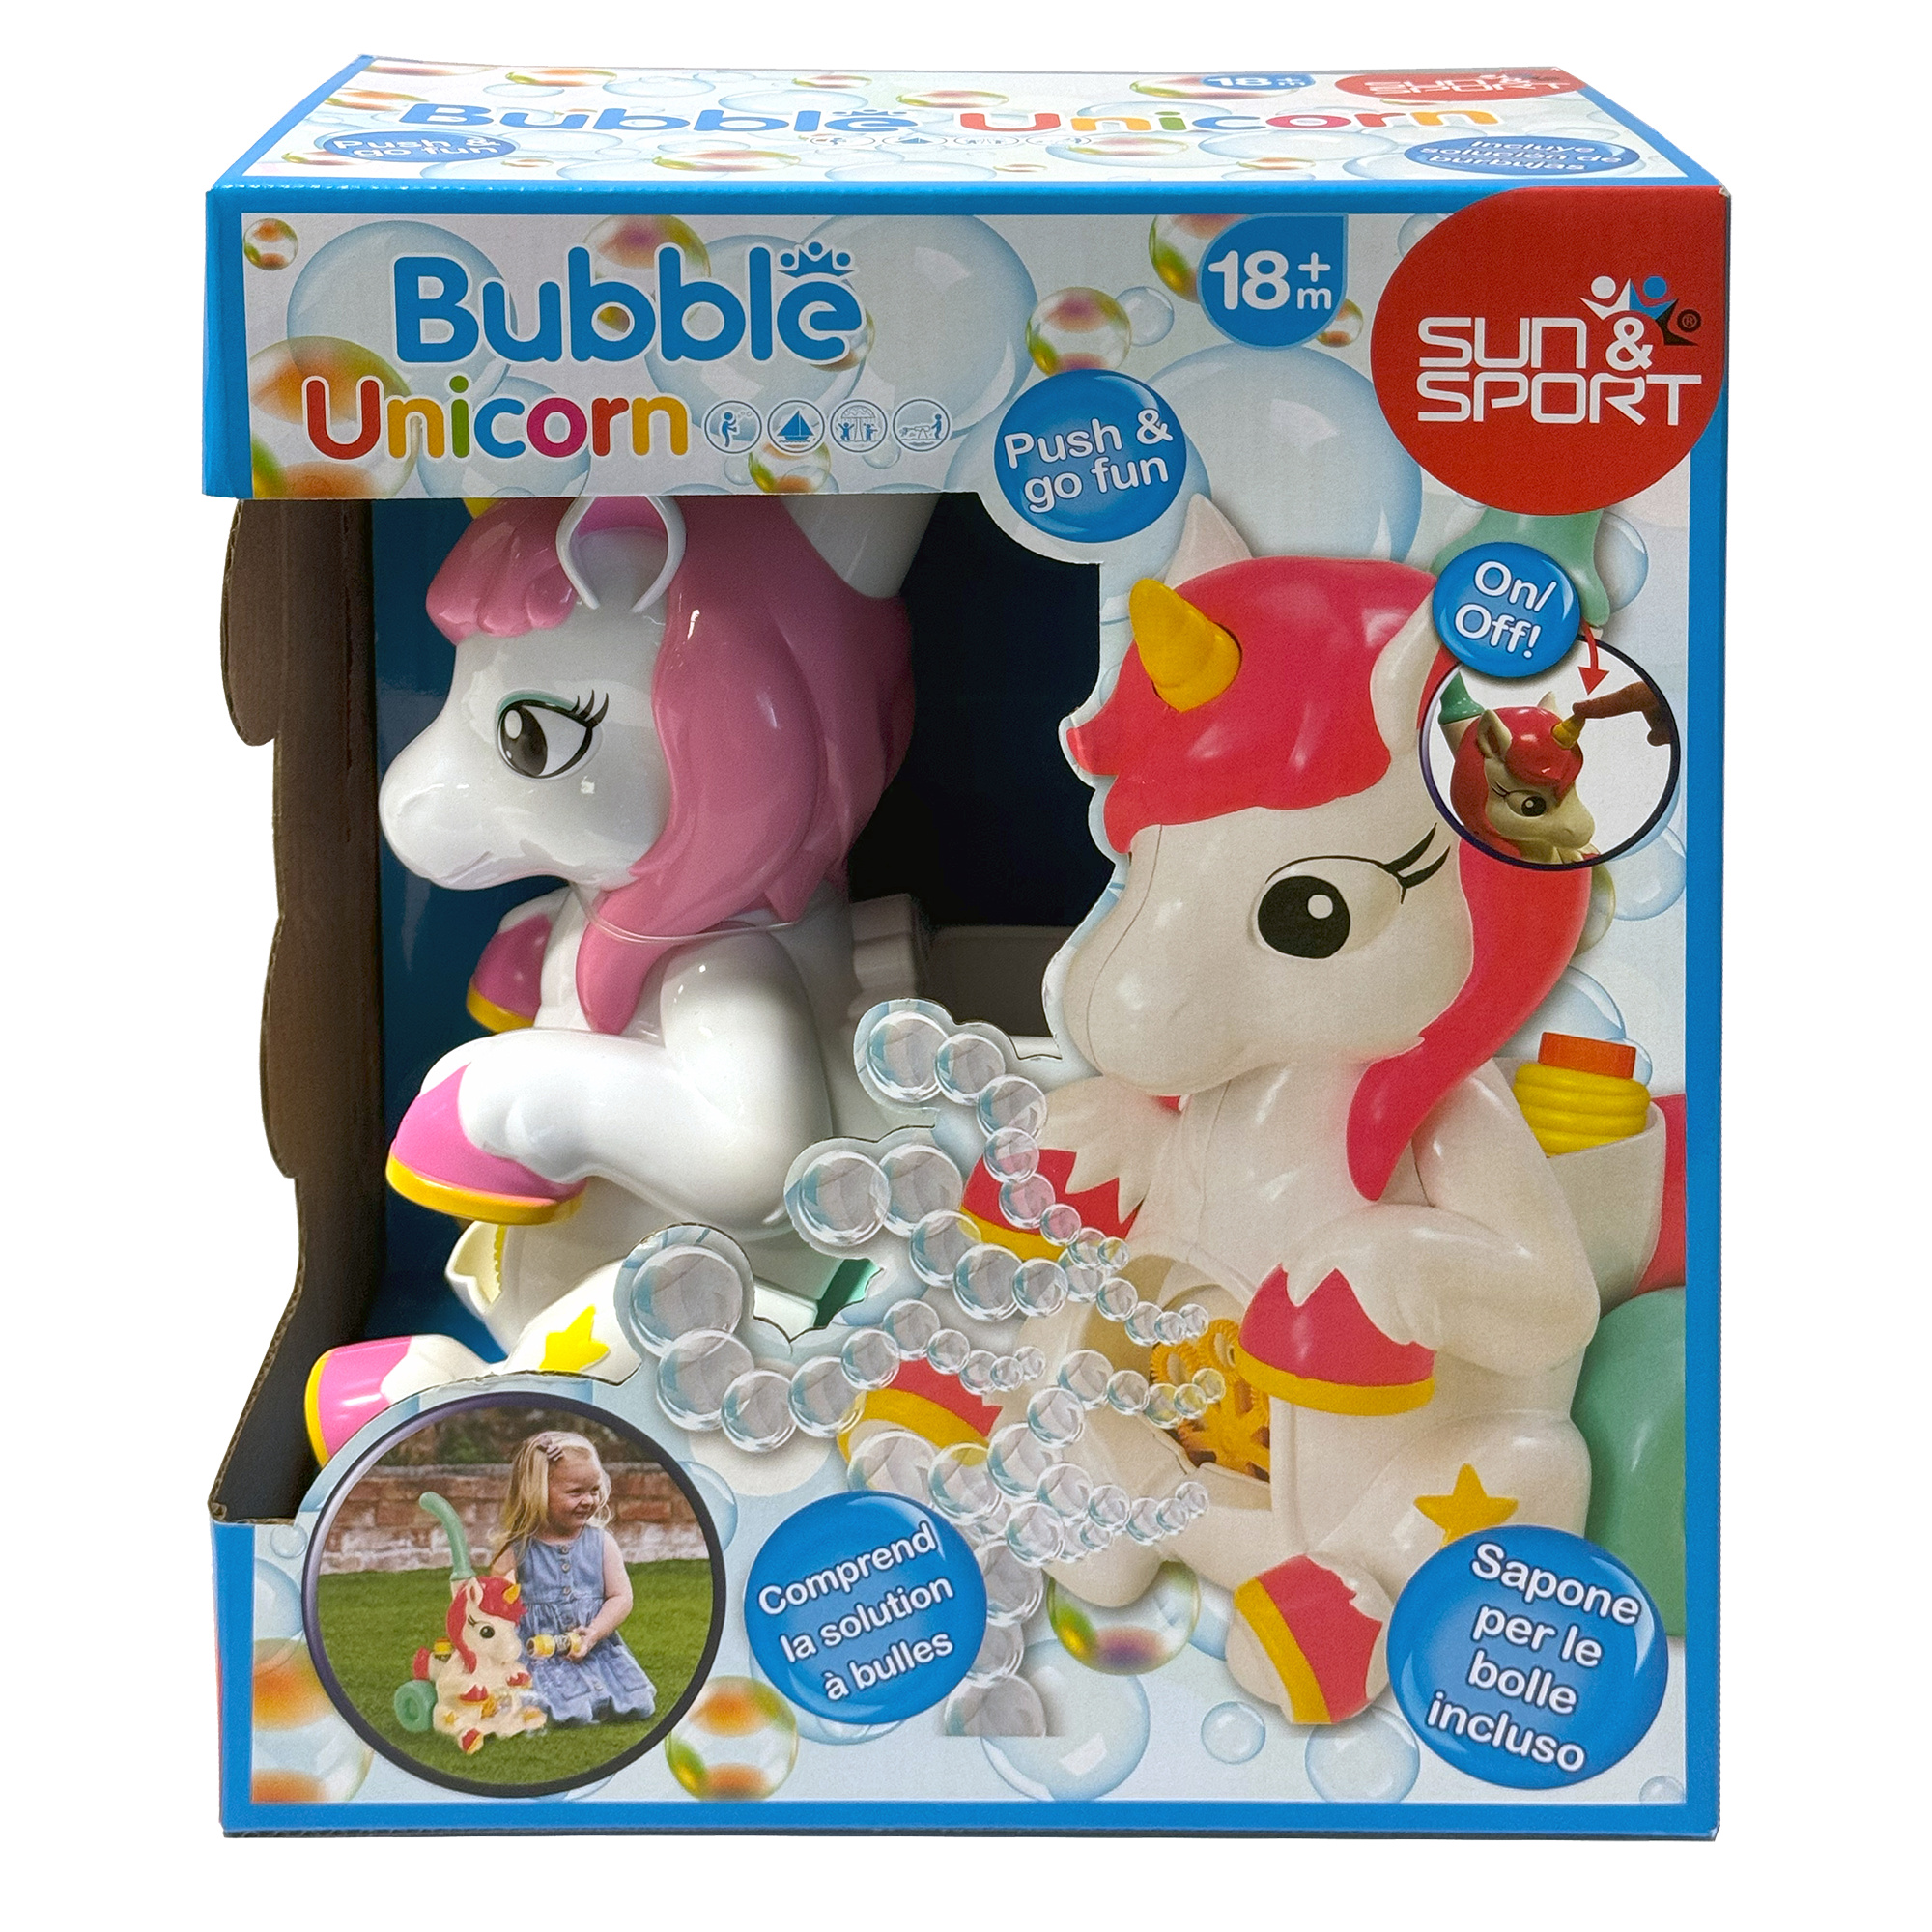 Bubble unicorn - Si, SUN&SPORT